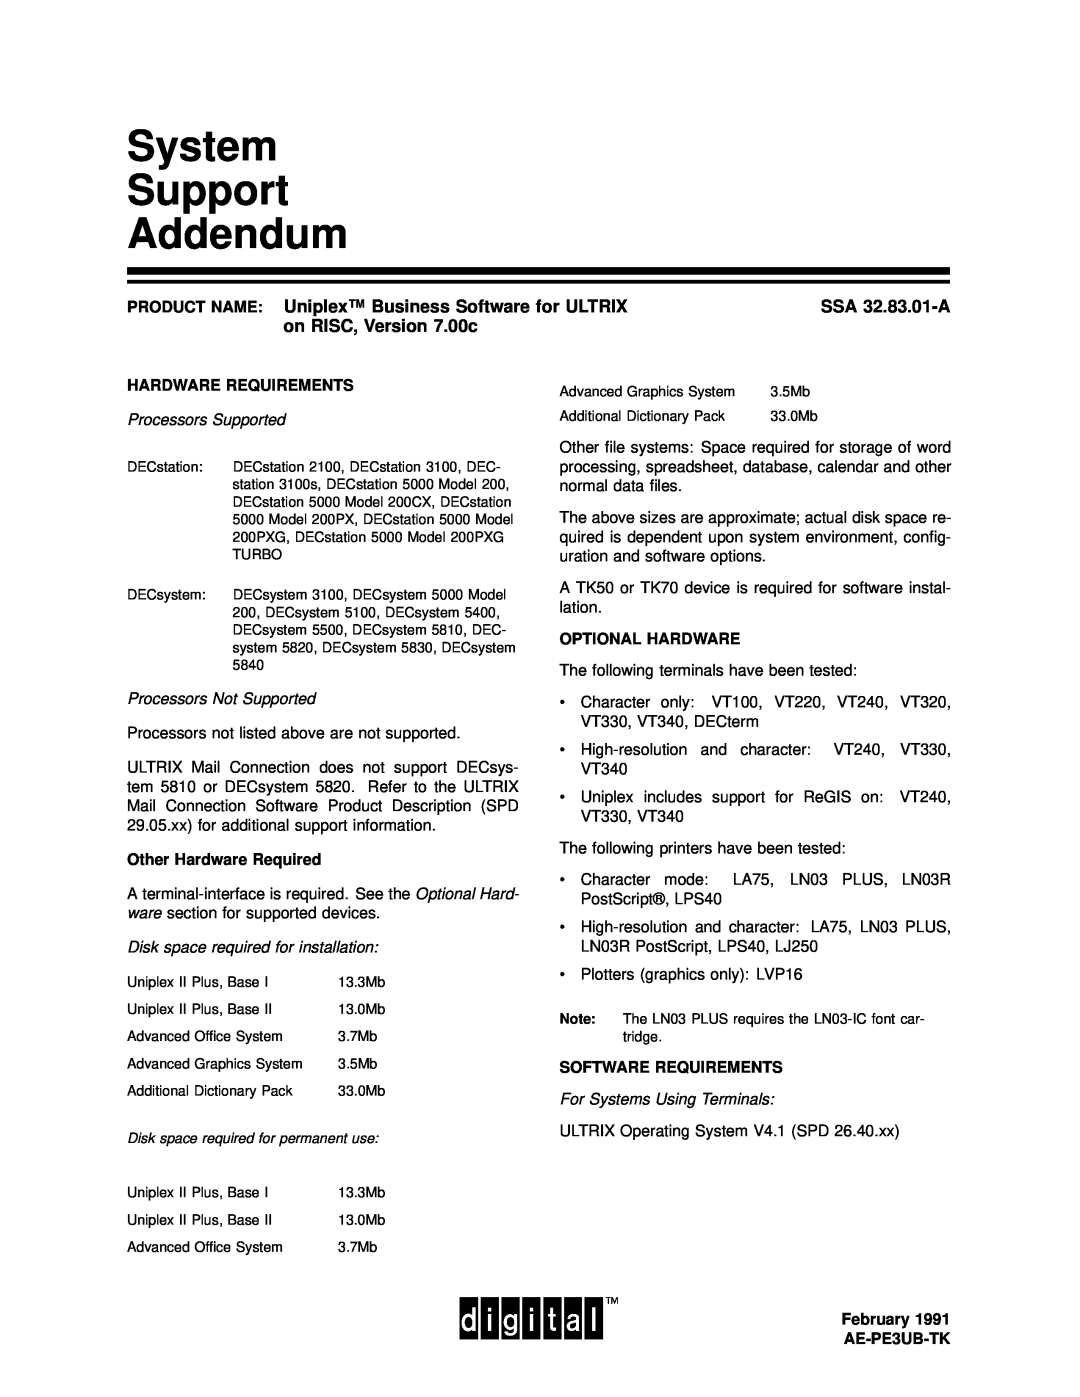 2Wire SPD 32.83.01 manual System Support Addendum, SSA 32.83.01-A, Processors Supported, Processors Not Supported 